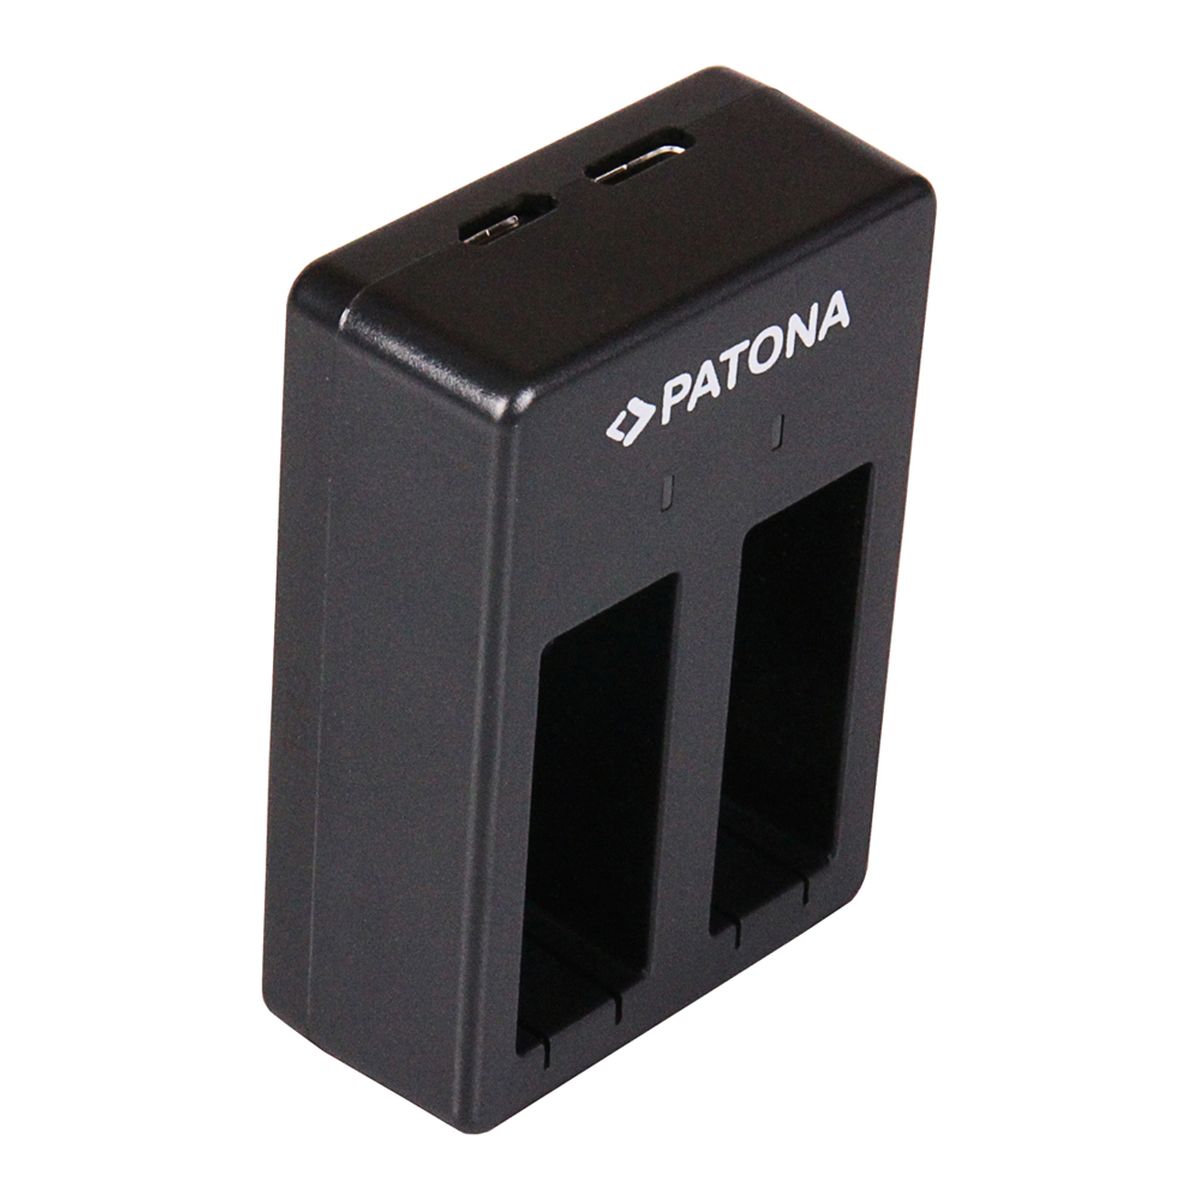 Patona Dual USB Schnell-Ladegerät GoPro HERO 8